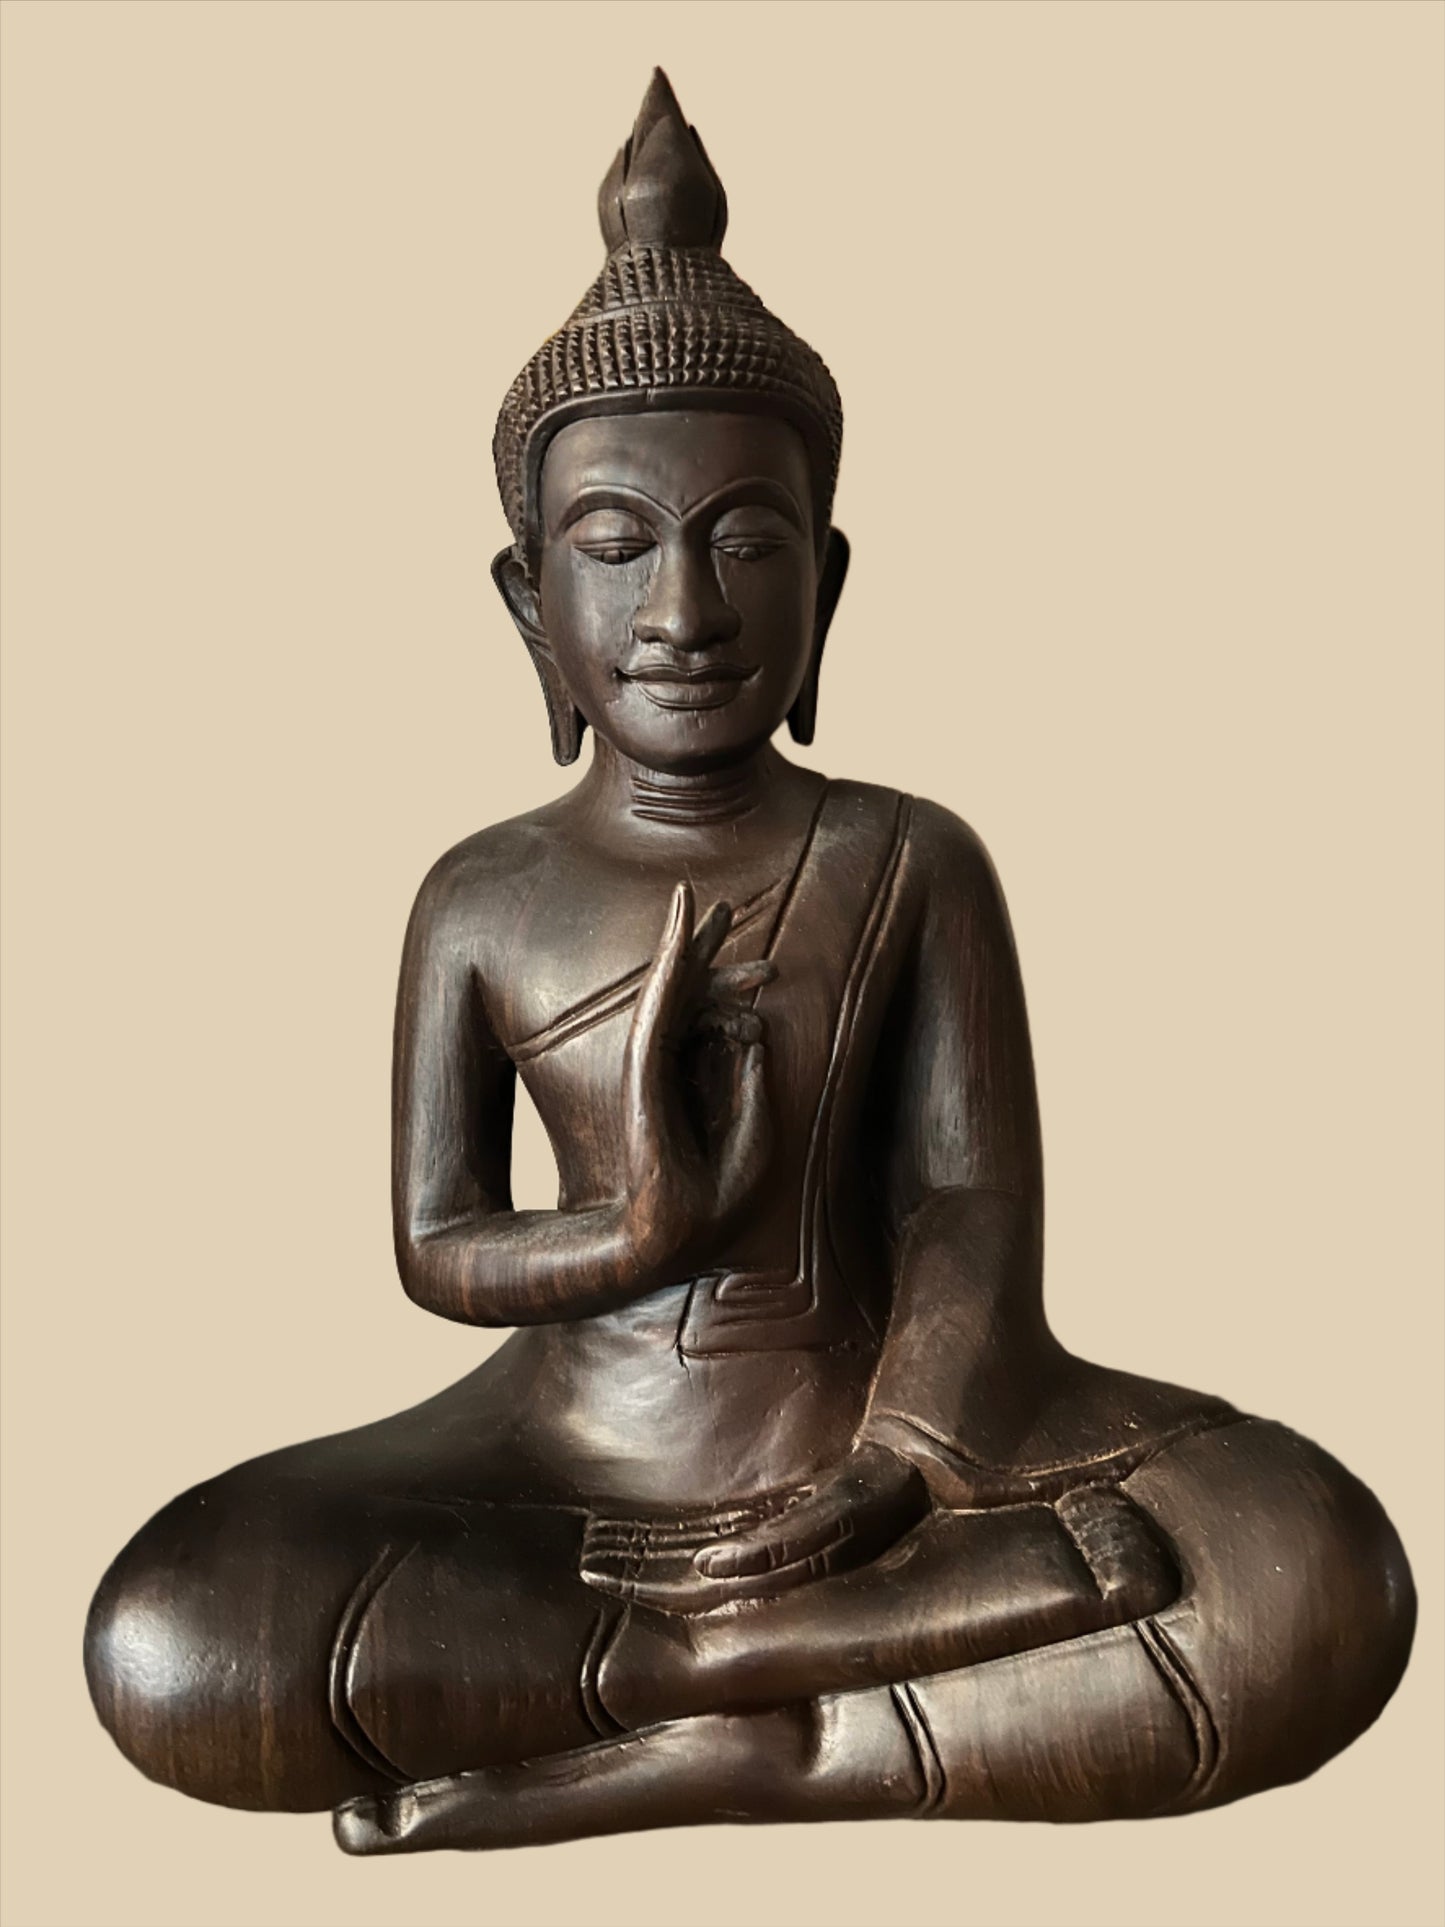 Cambodian seated Buddha in meditation